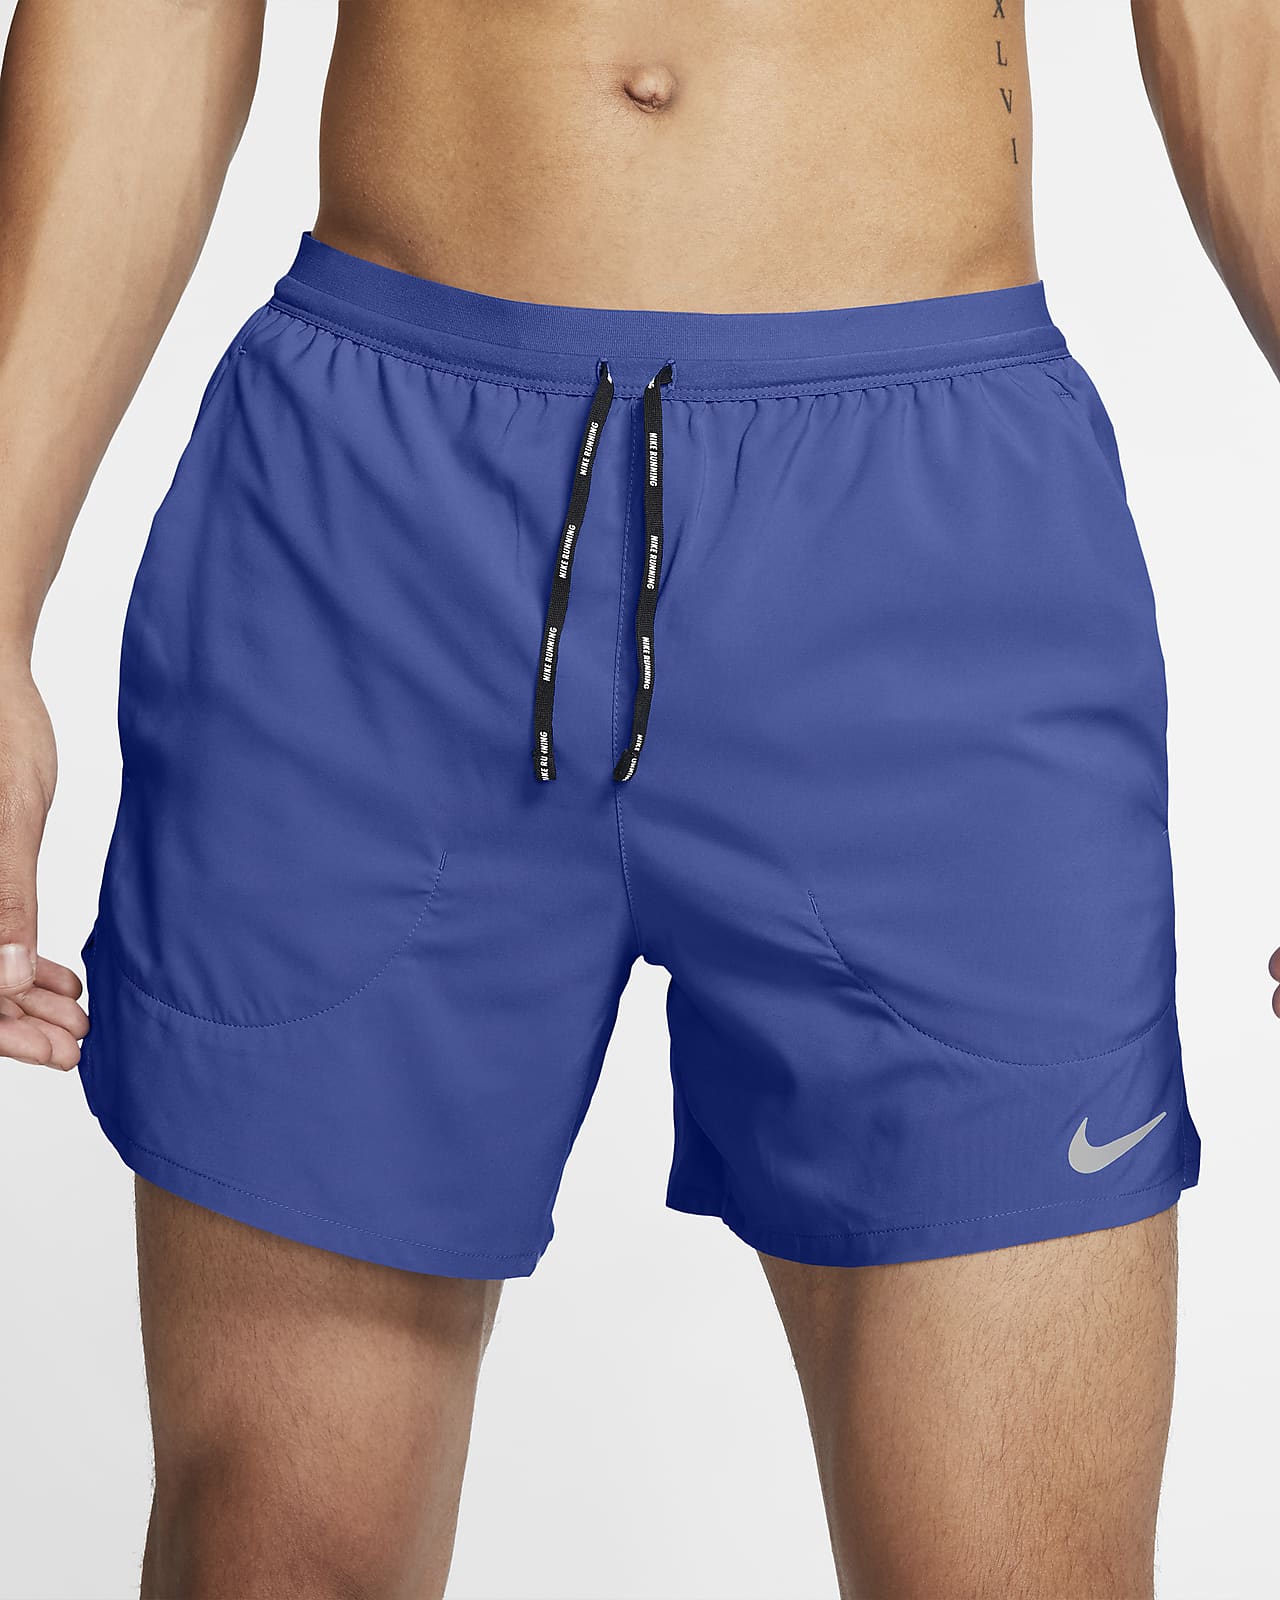 Brief Running Shorts. Nike LU